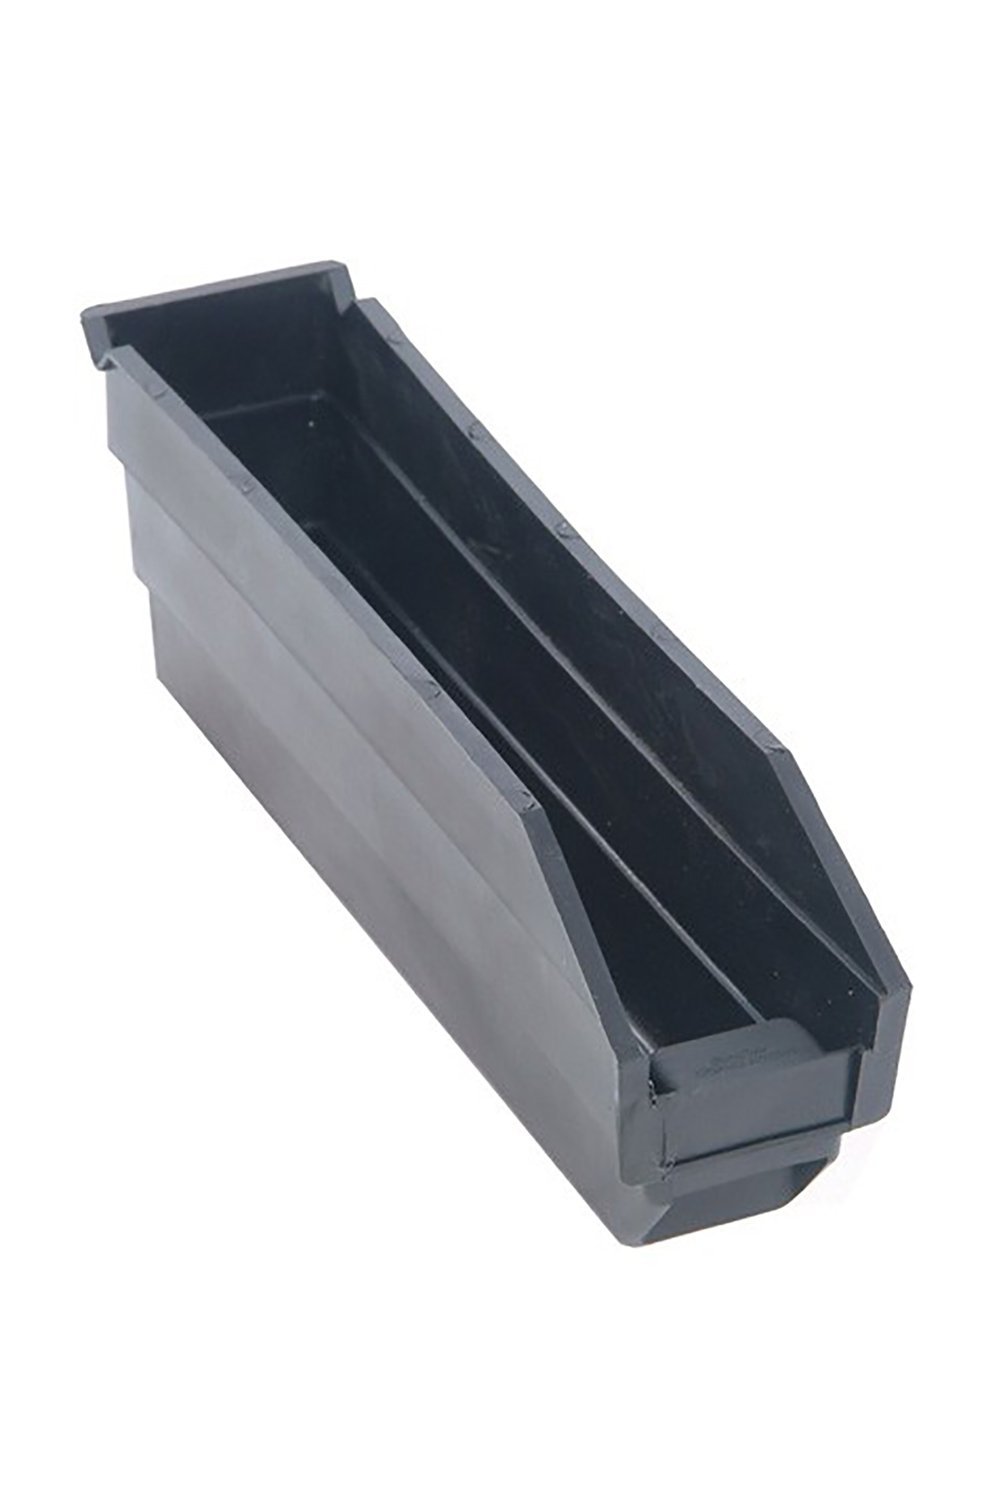 Recycled Shelf Bin Bins & Containers Acart 11-5/8'' x 2-3/4'' x 4'' Black 